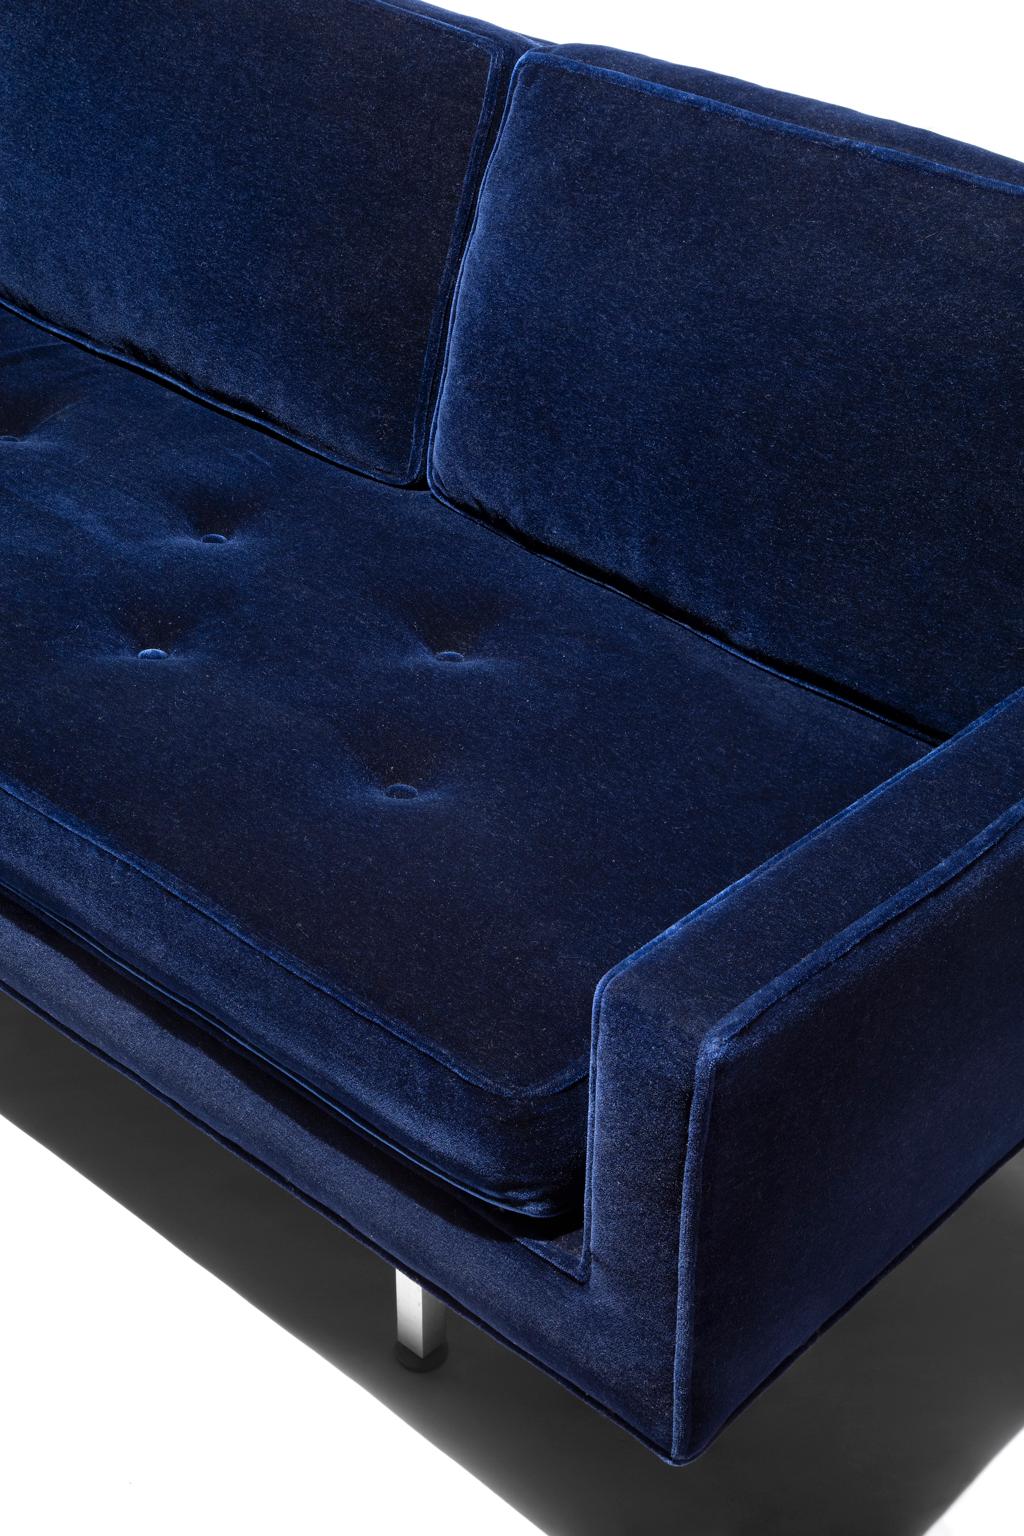 Fabric Dunbar Edward Wormley  Deep Blue Alpaca Sofa Mid-Century Modern For Sale